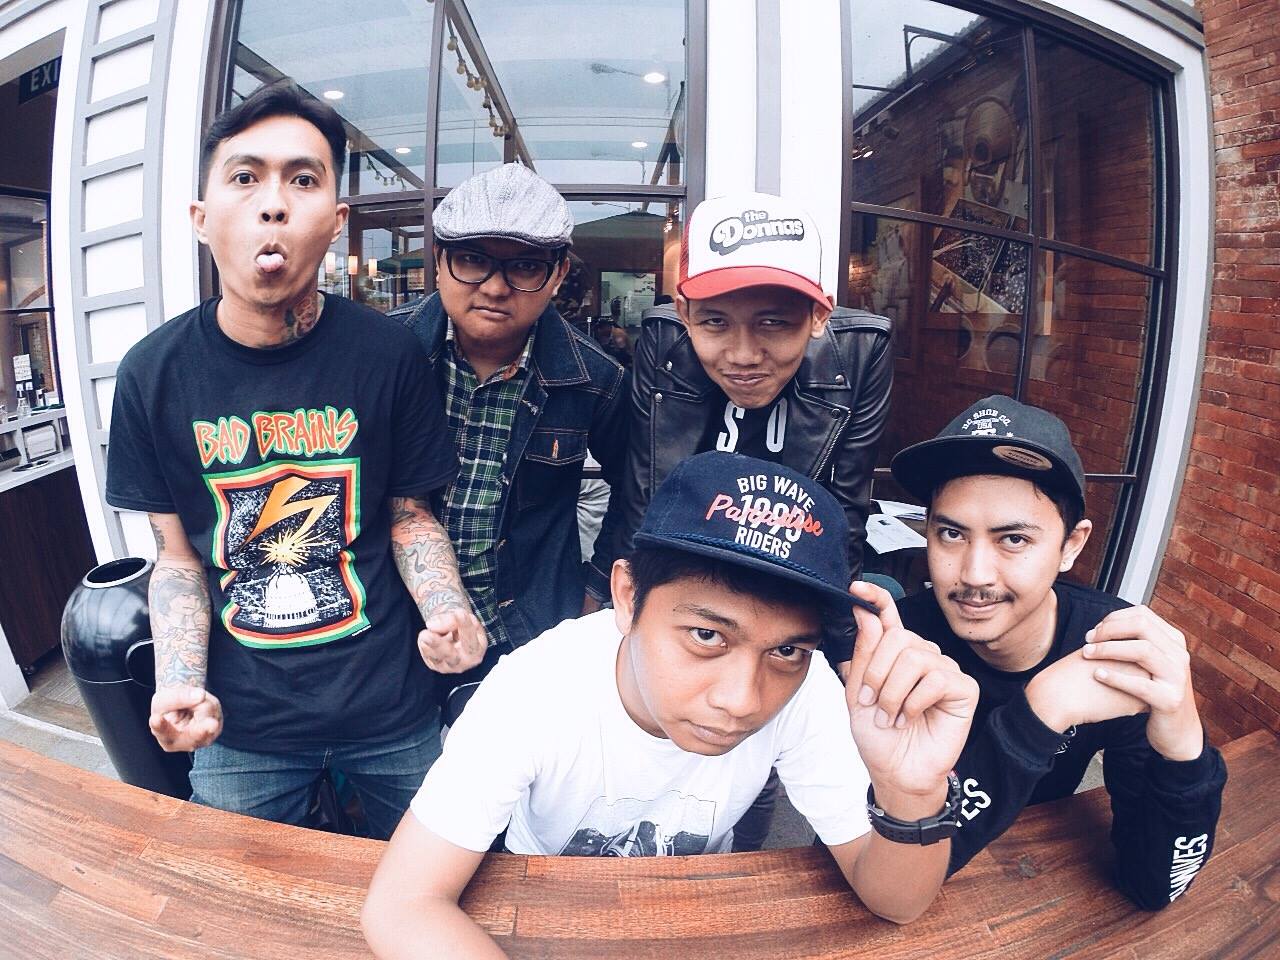 Topi Jerami pop punk band from Bogor - Unite Asia